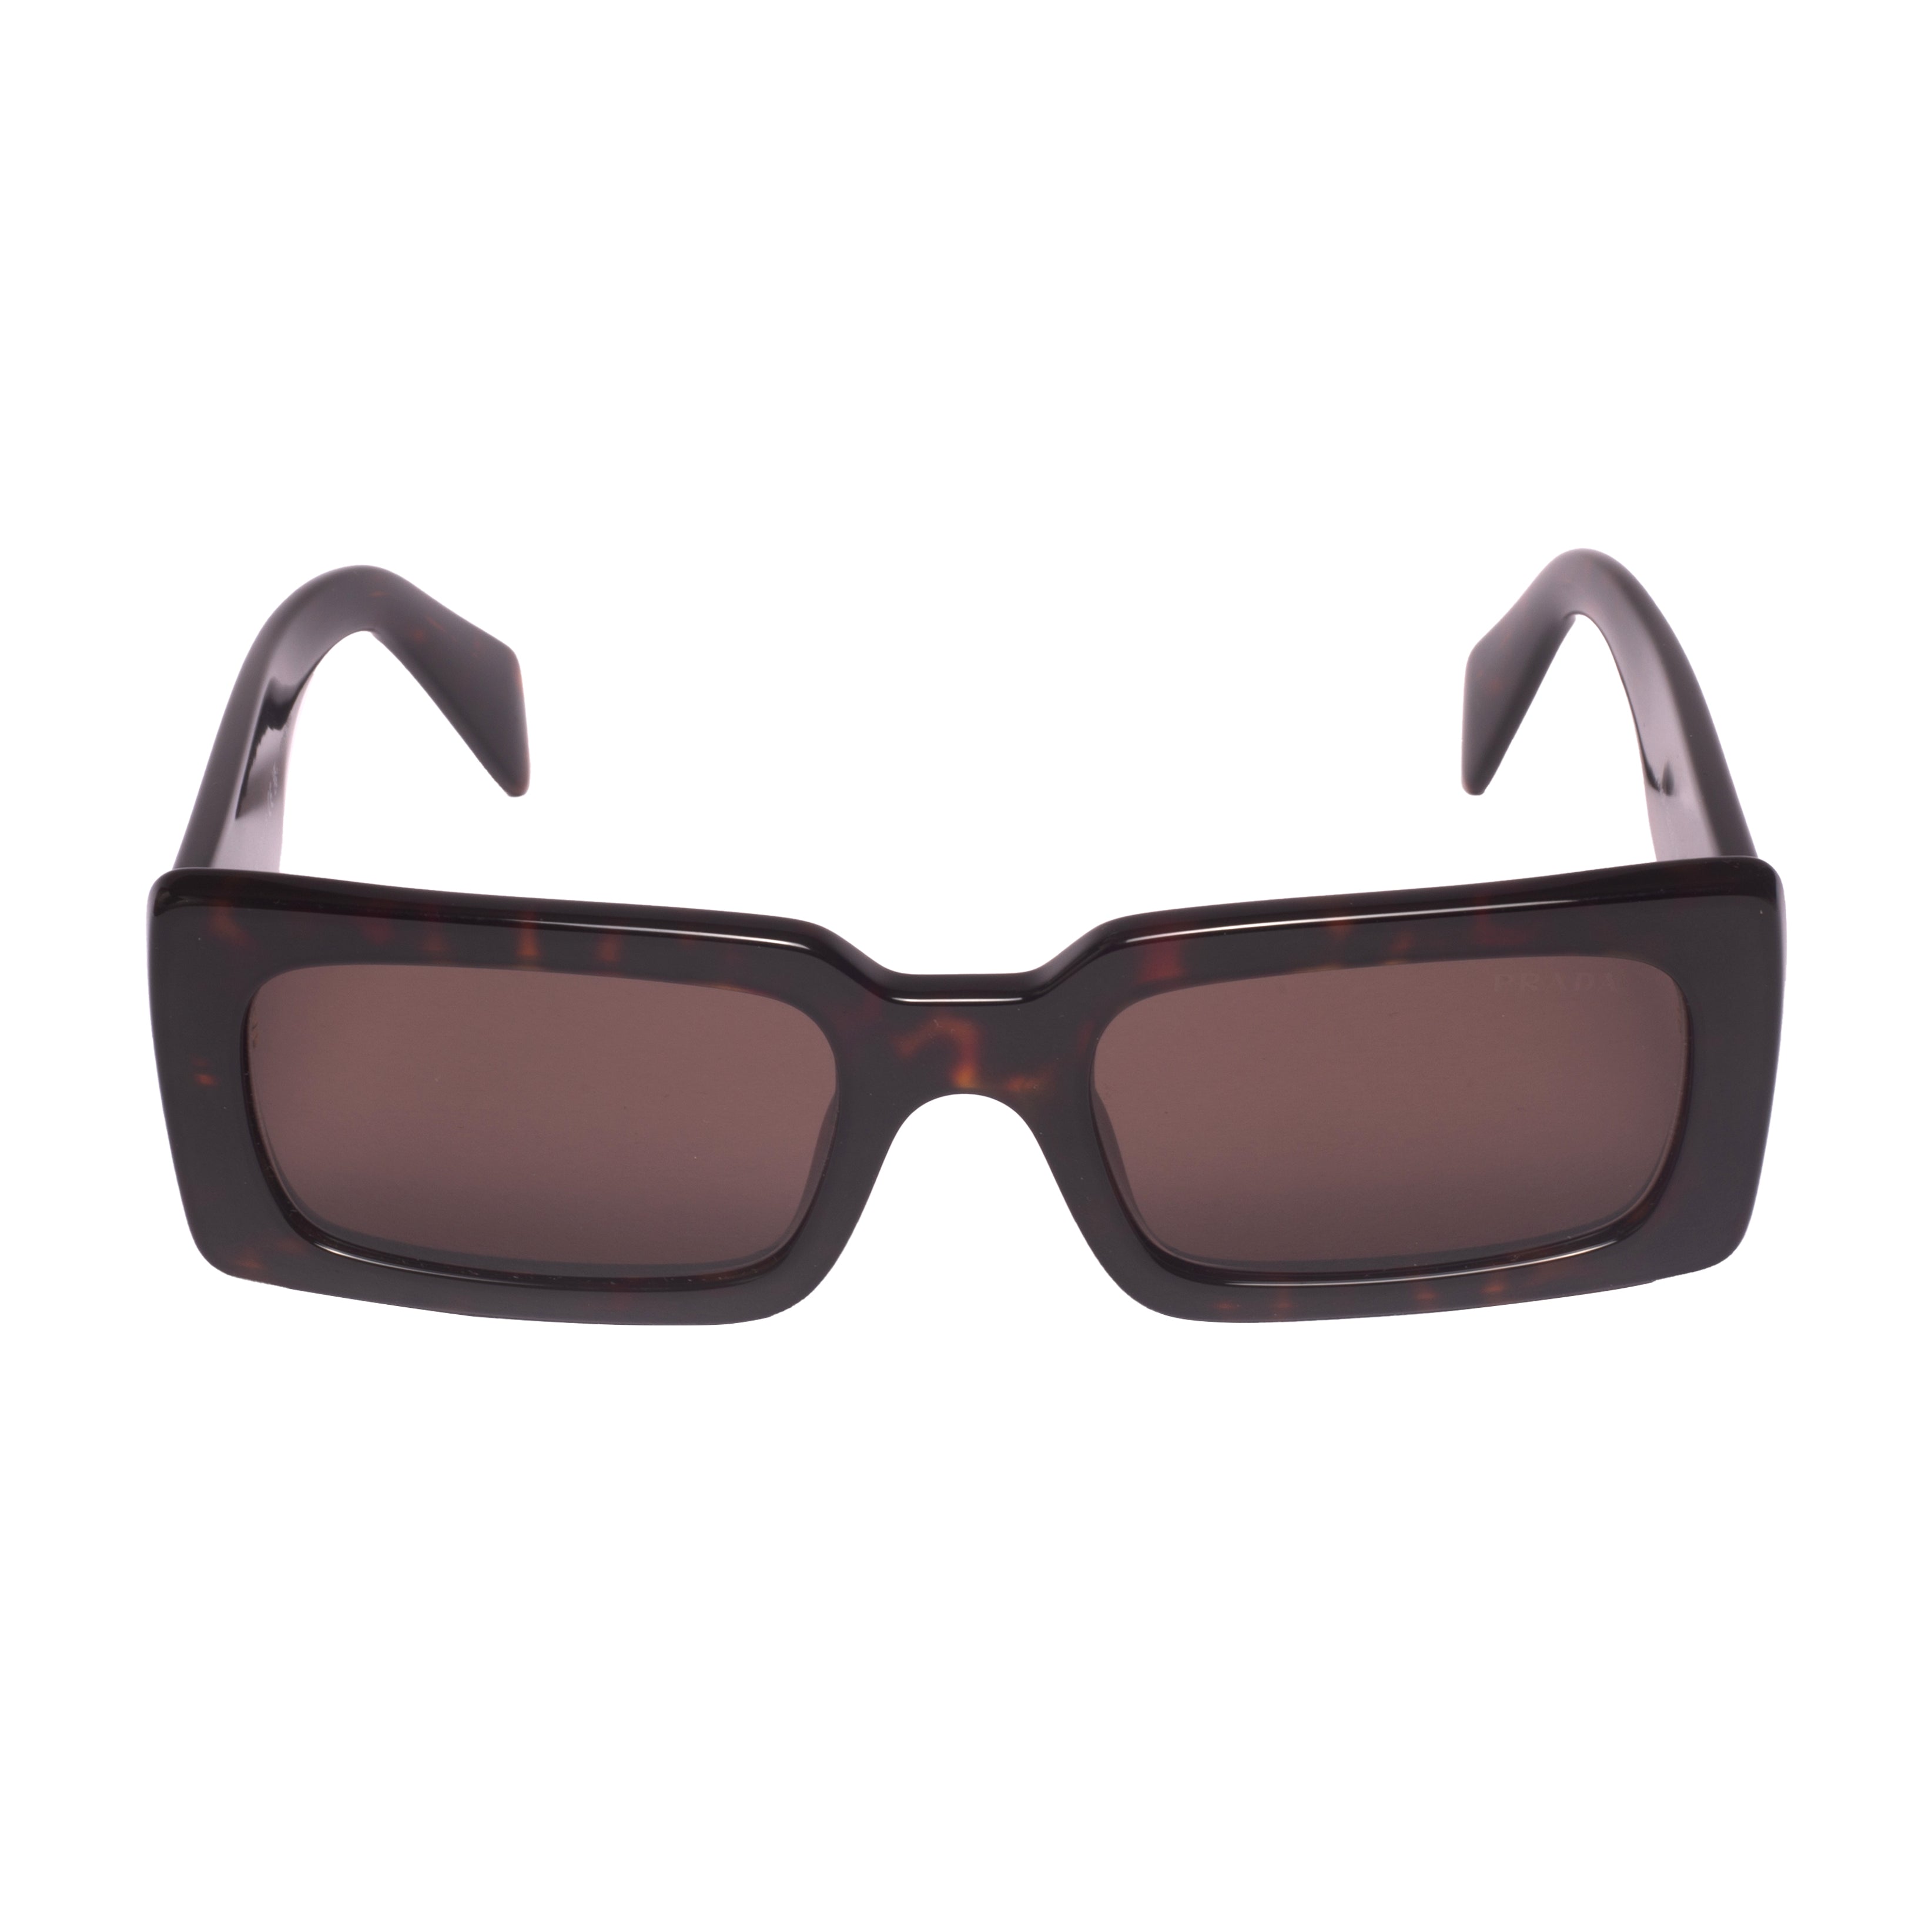 Prada-PRA07S-52-16N5Y Sunglasses - Premium Sunglasses from Prada - Just Rs. 38190! Shop now at Laxmi Opticians